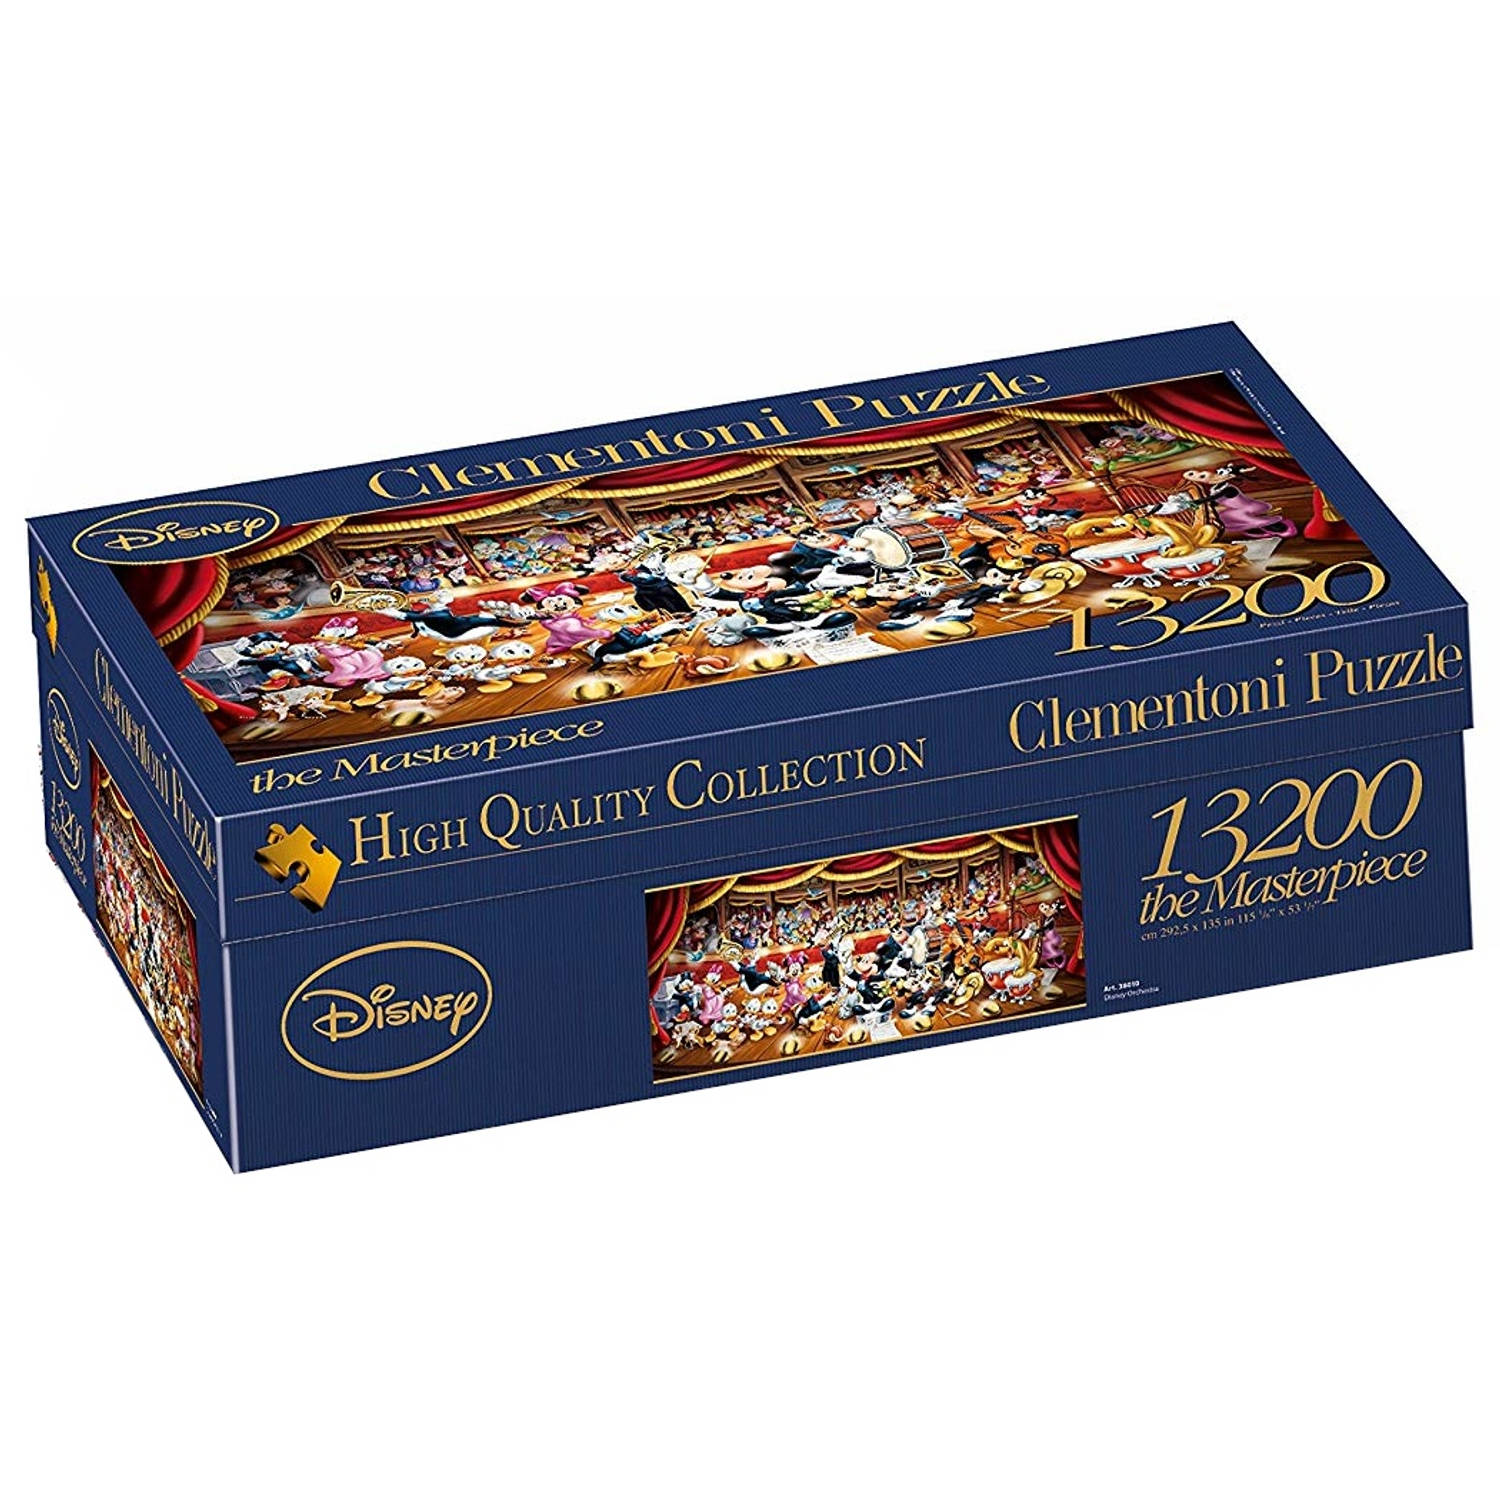 Clementoni Legpuzzel - High Quality Puzzel Collectie - Disney Orchestra - 13200 stukjes, puzzel volwassenen